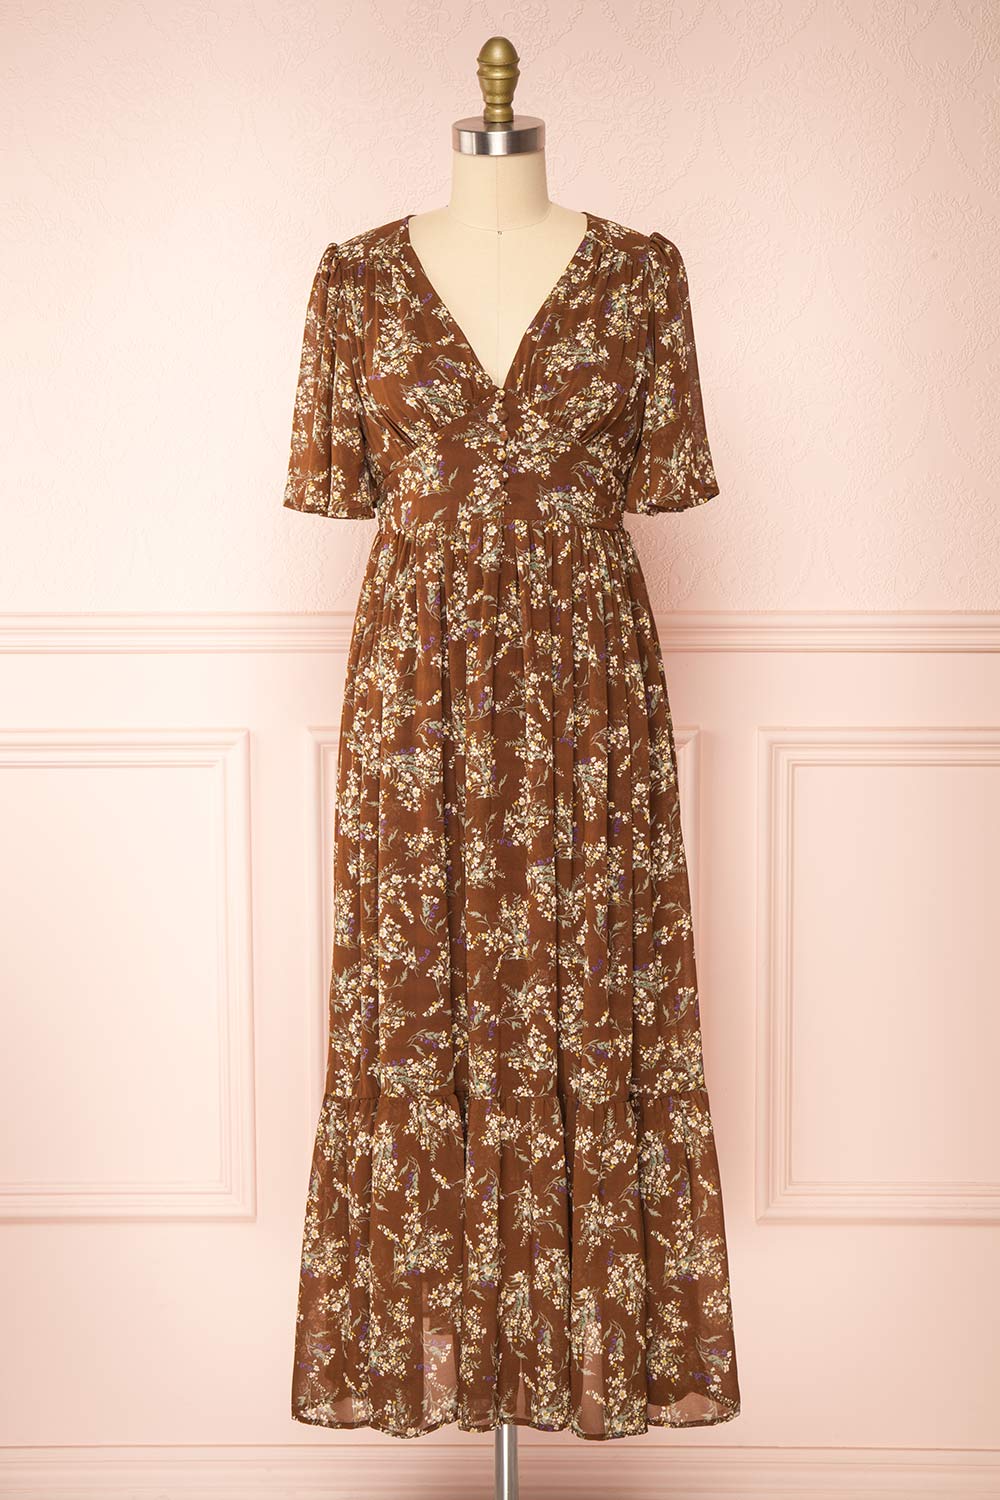 Britt Mocha | Floral Midi Dress w/ Short Sleeves | Boutique 1861 front view